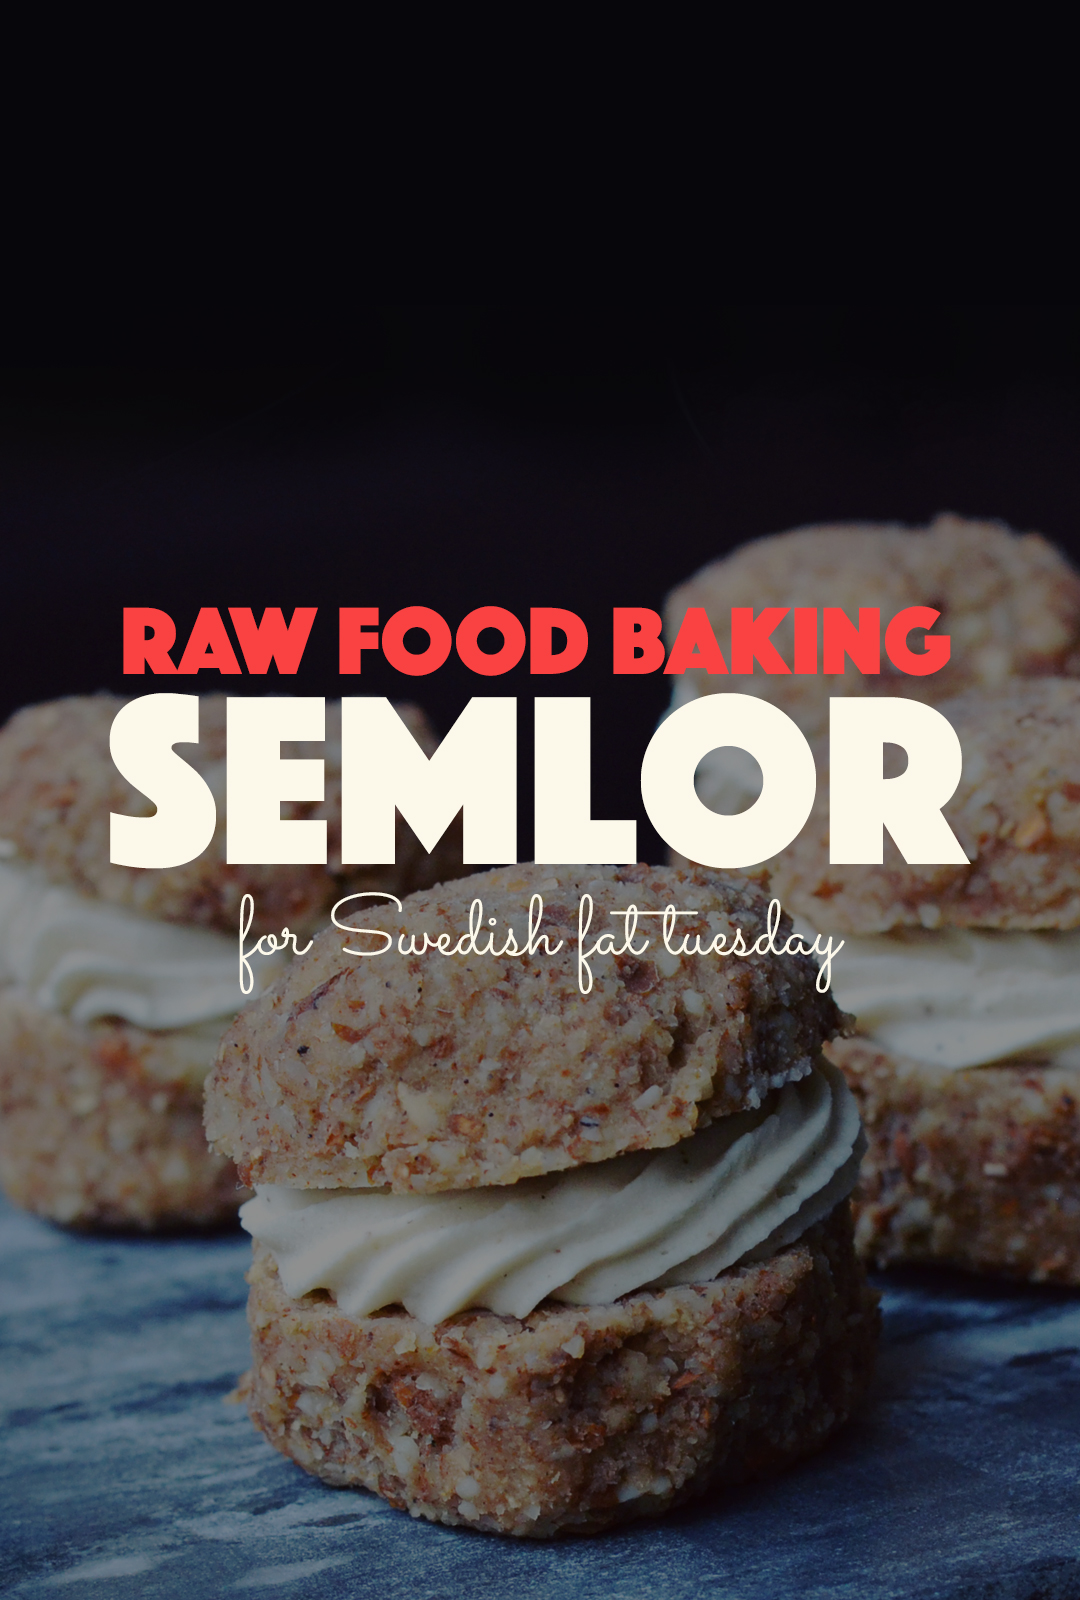 Raw Semlor for Swedish Fat Tuesday | http://BananaBloom.com #rawfood #rawbaking #semlor #raw #vegan #plantbased